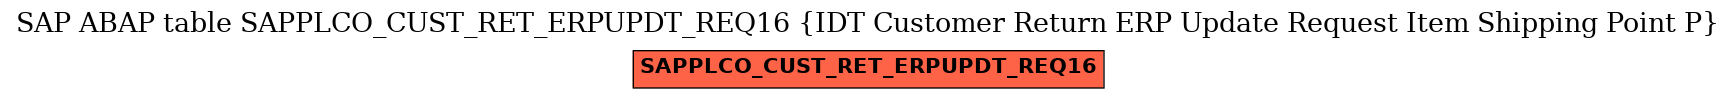 E-R Diagram for table SAPPLCO_CUST_RET_ERPUPDT_REQ16 (IDT Customer Return ERP Update Request Item Shipping Point P)